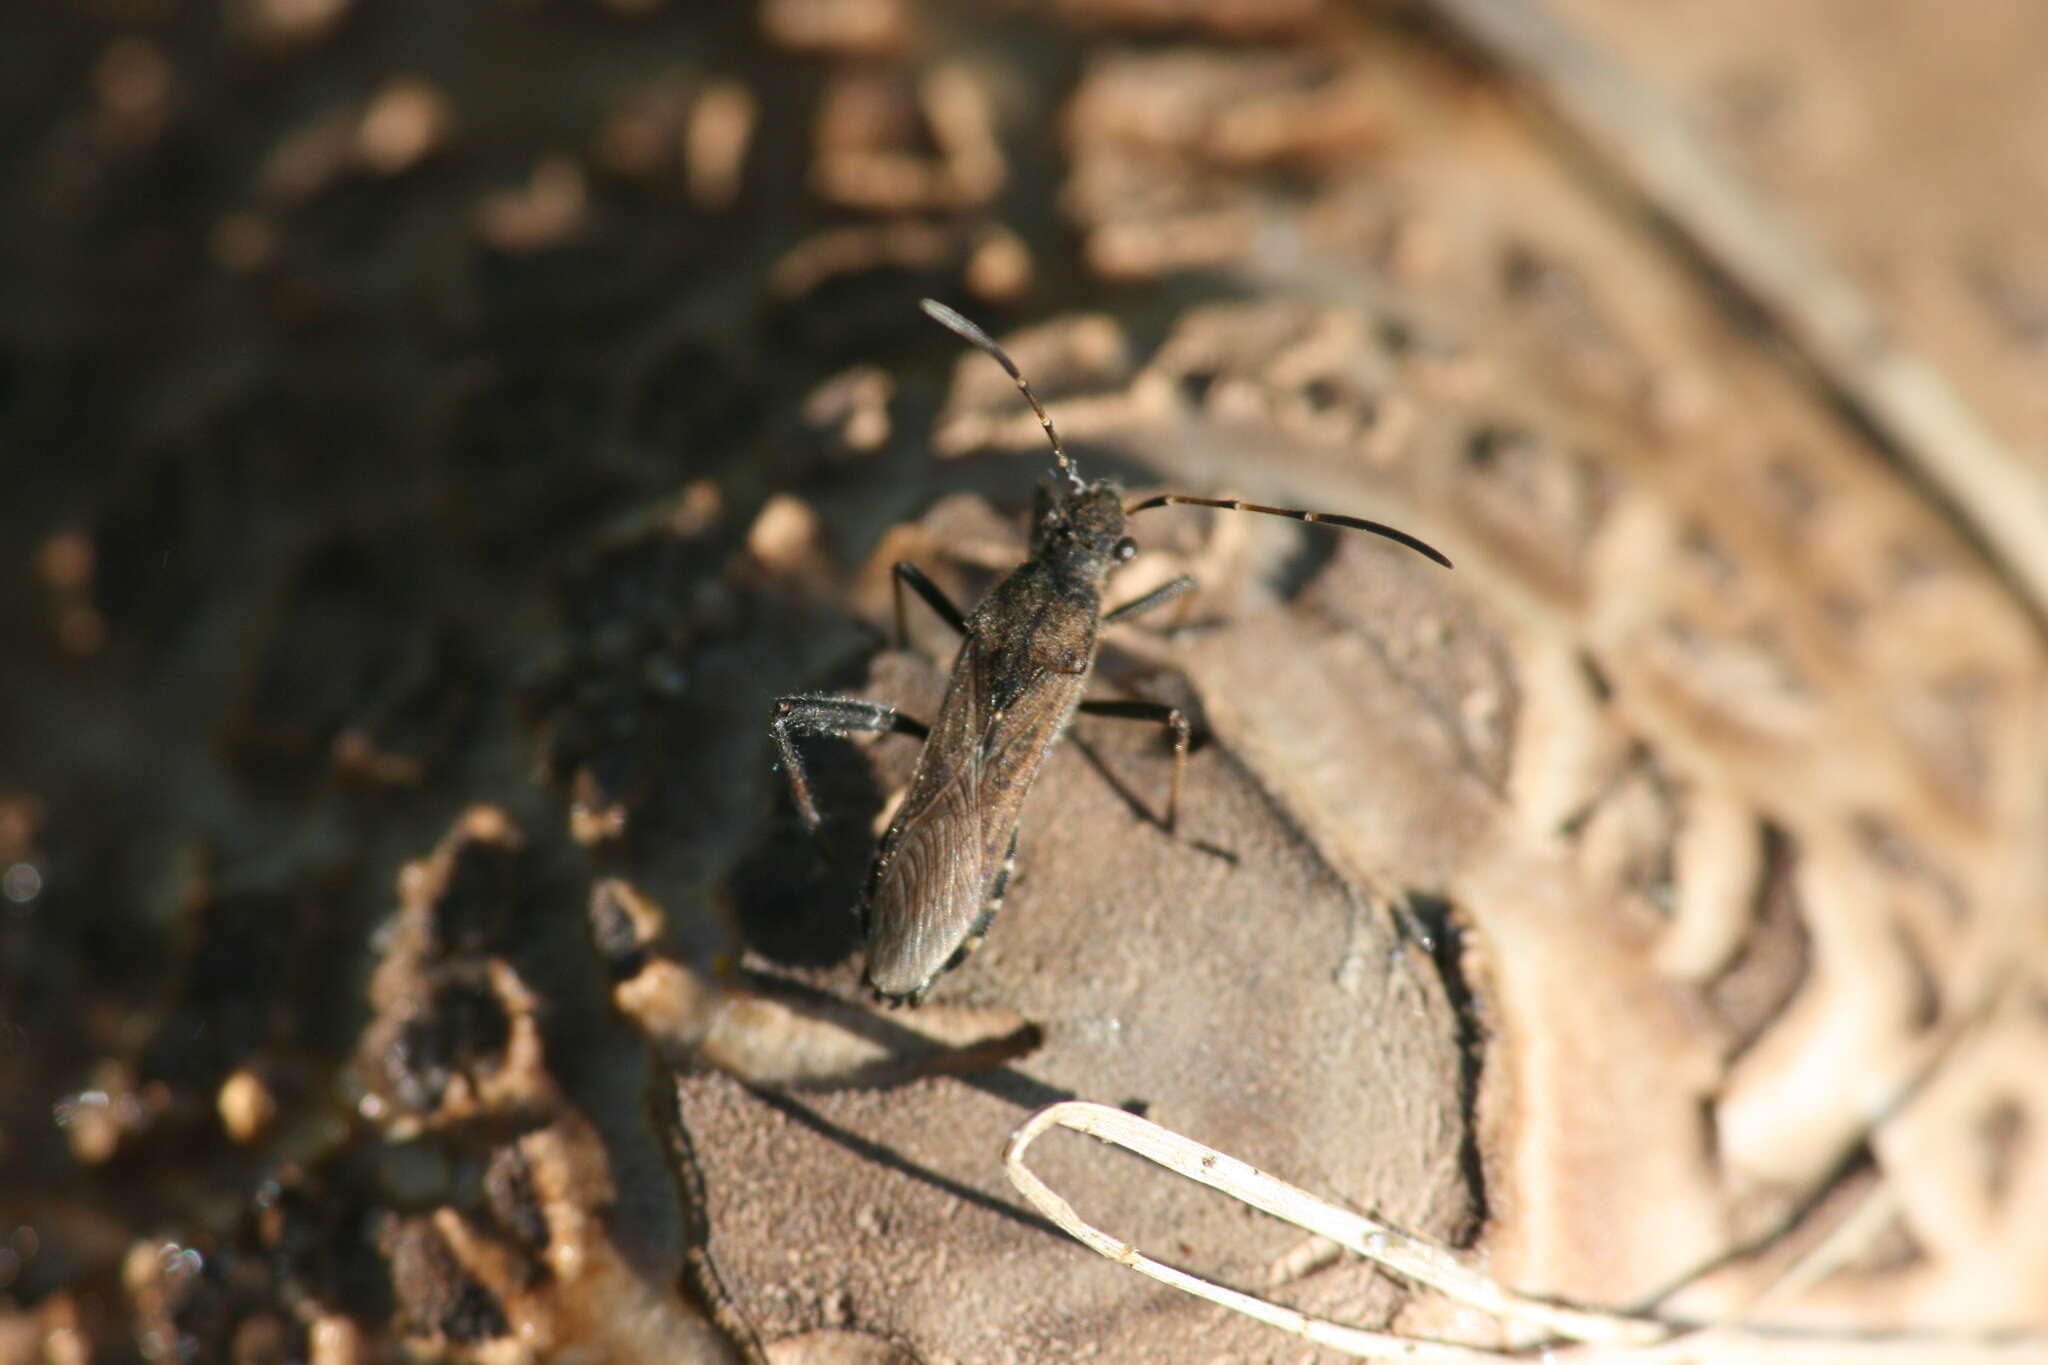 Image of Redbacked broad-headed bug